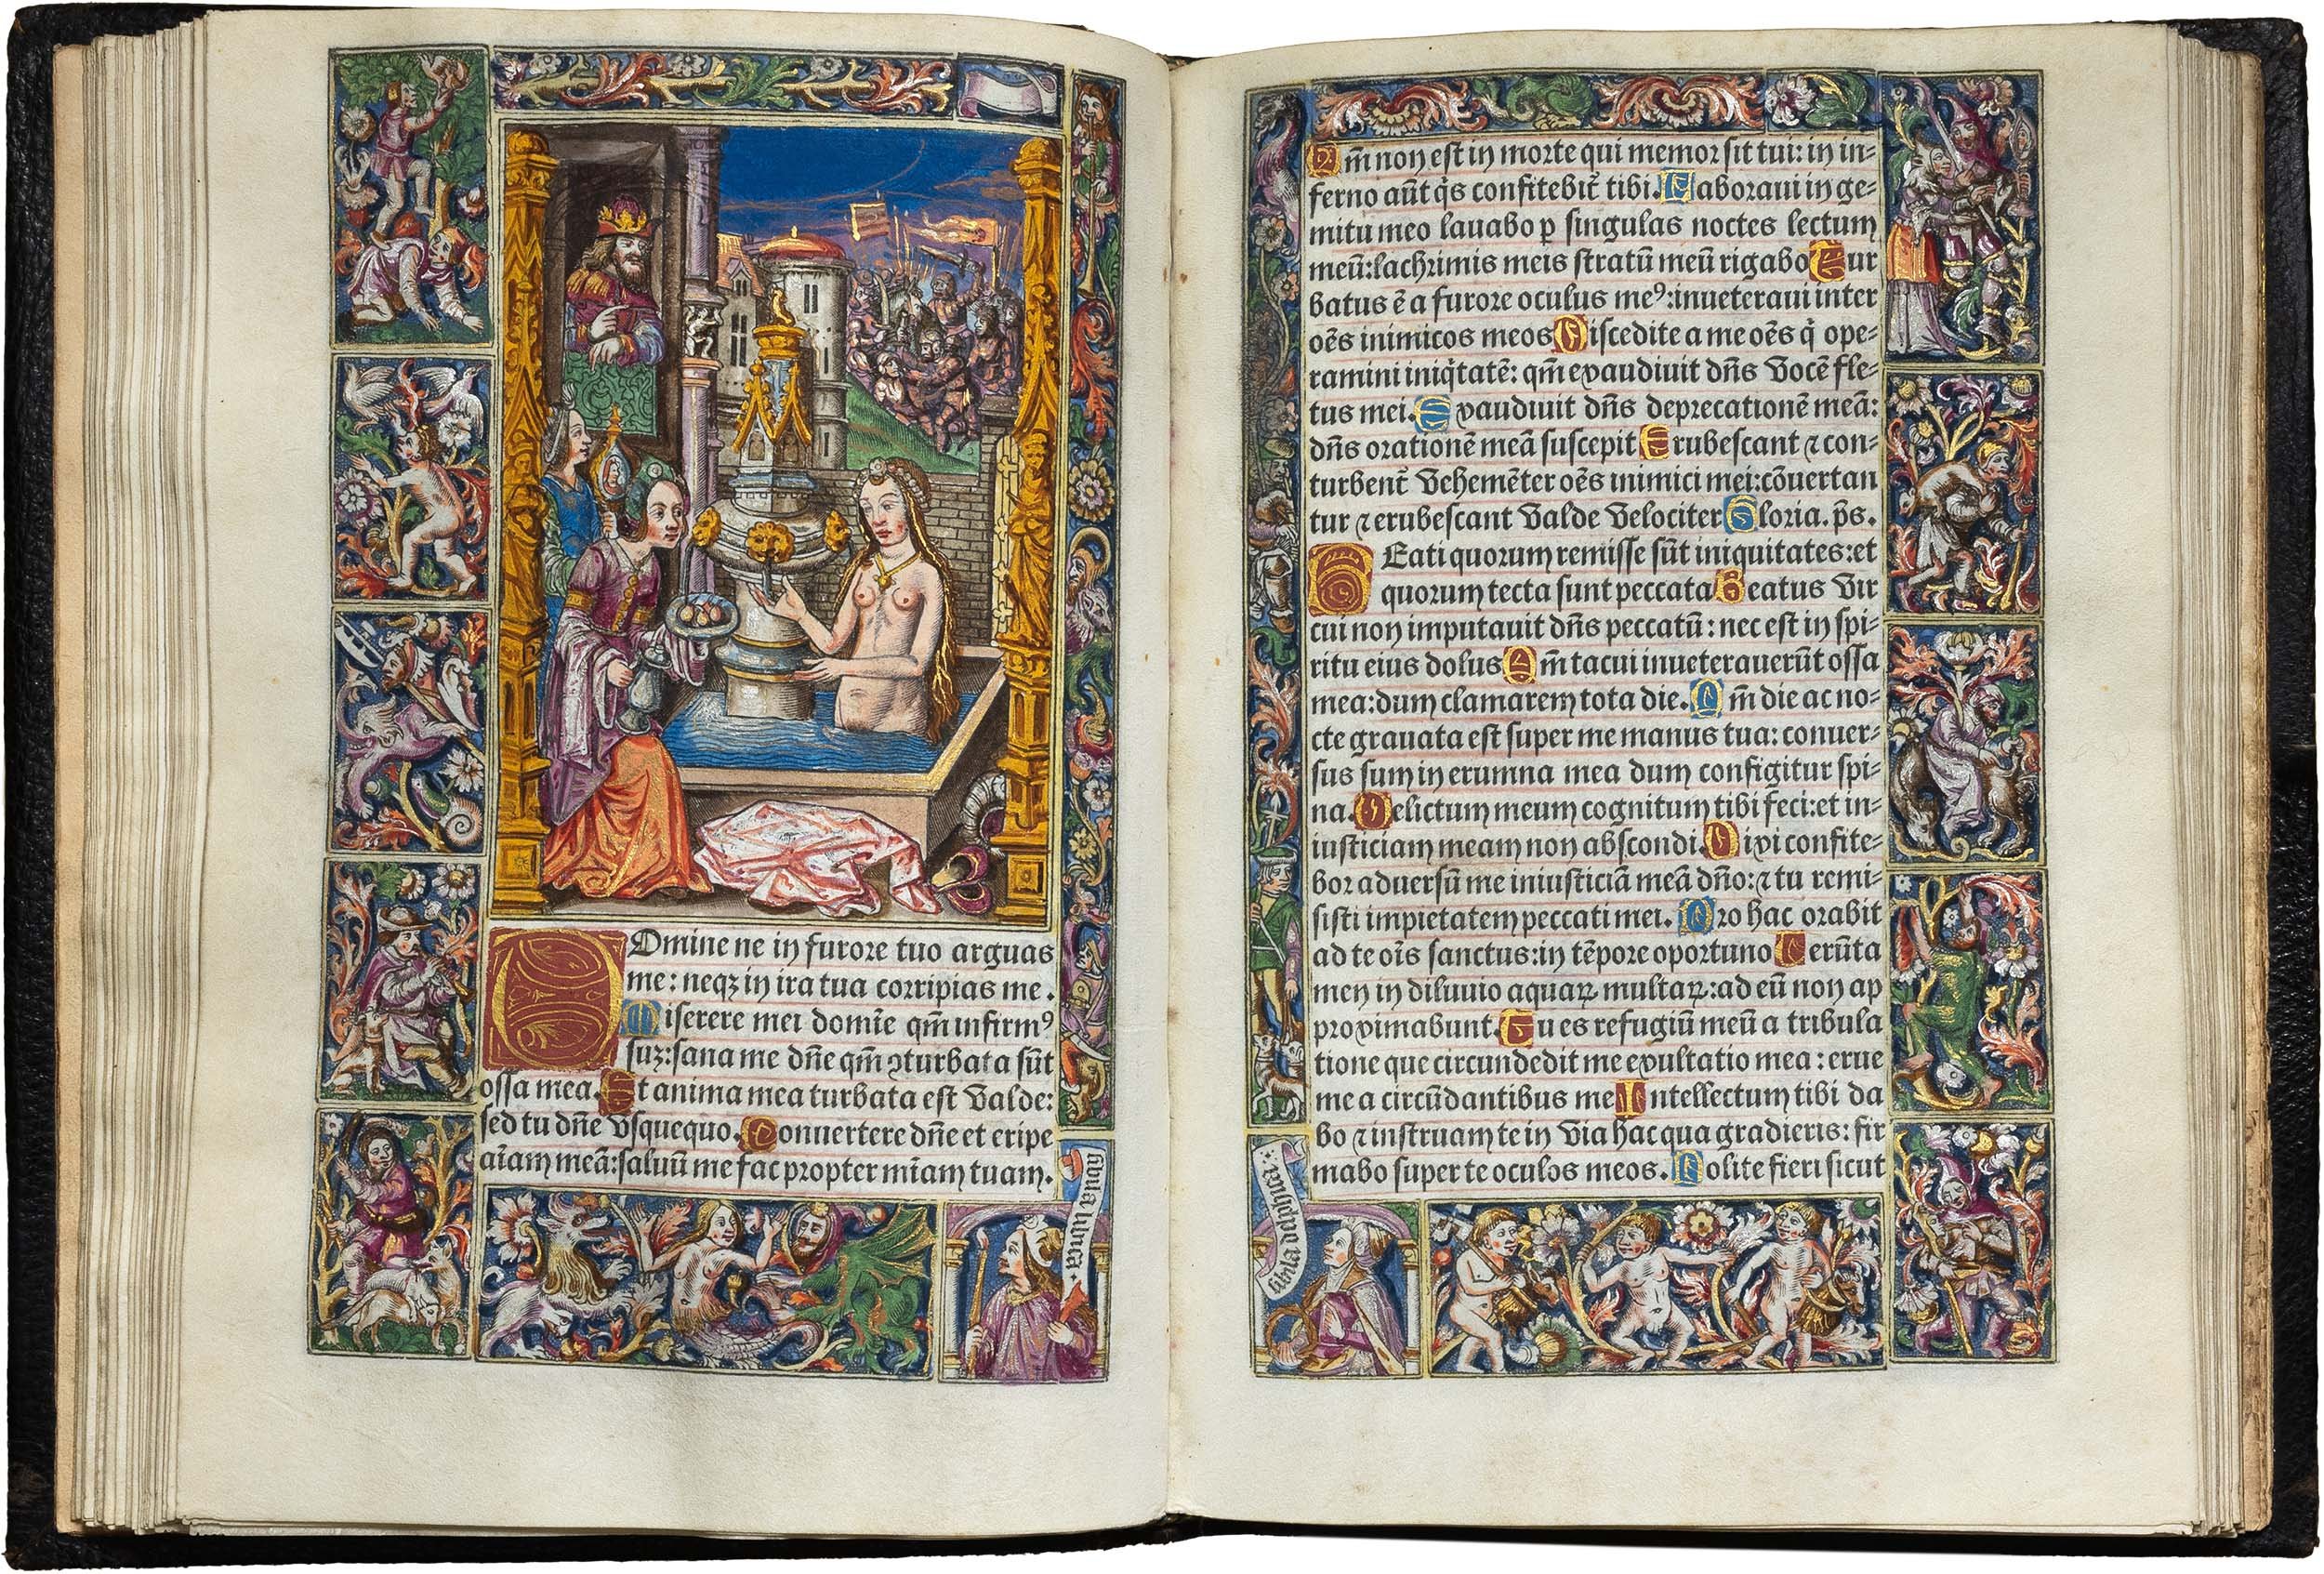 Printed-Book-of-Hours-10-january-1503-horae-bmv-kerver-remacle-illuminated-vellum-copy-schönborn-buchheim-42.jpg